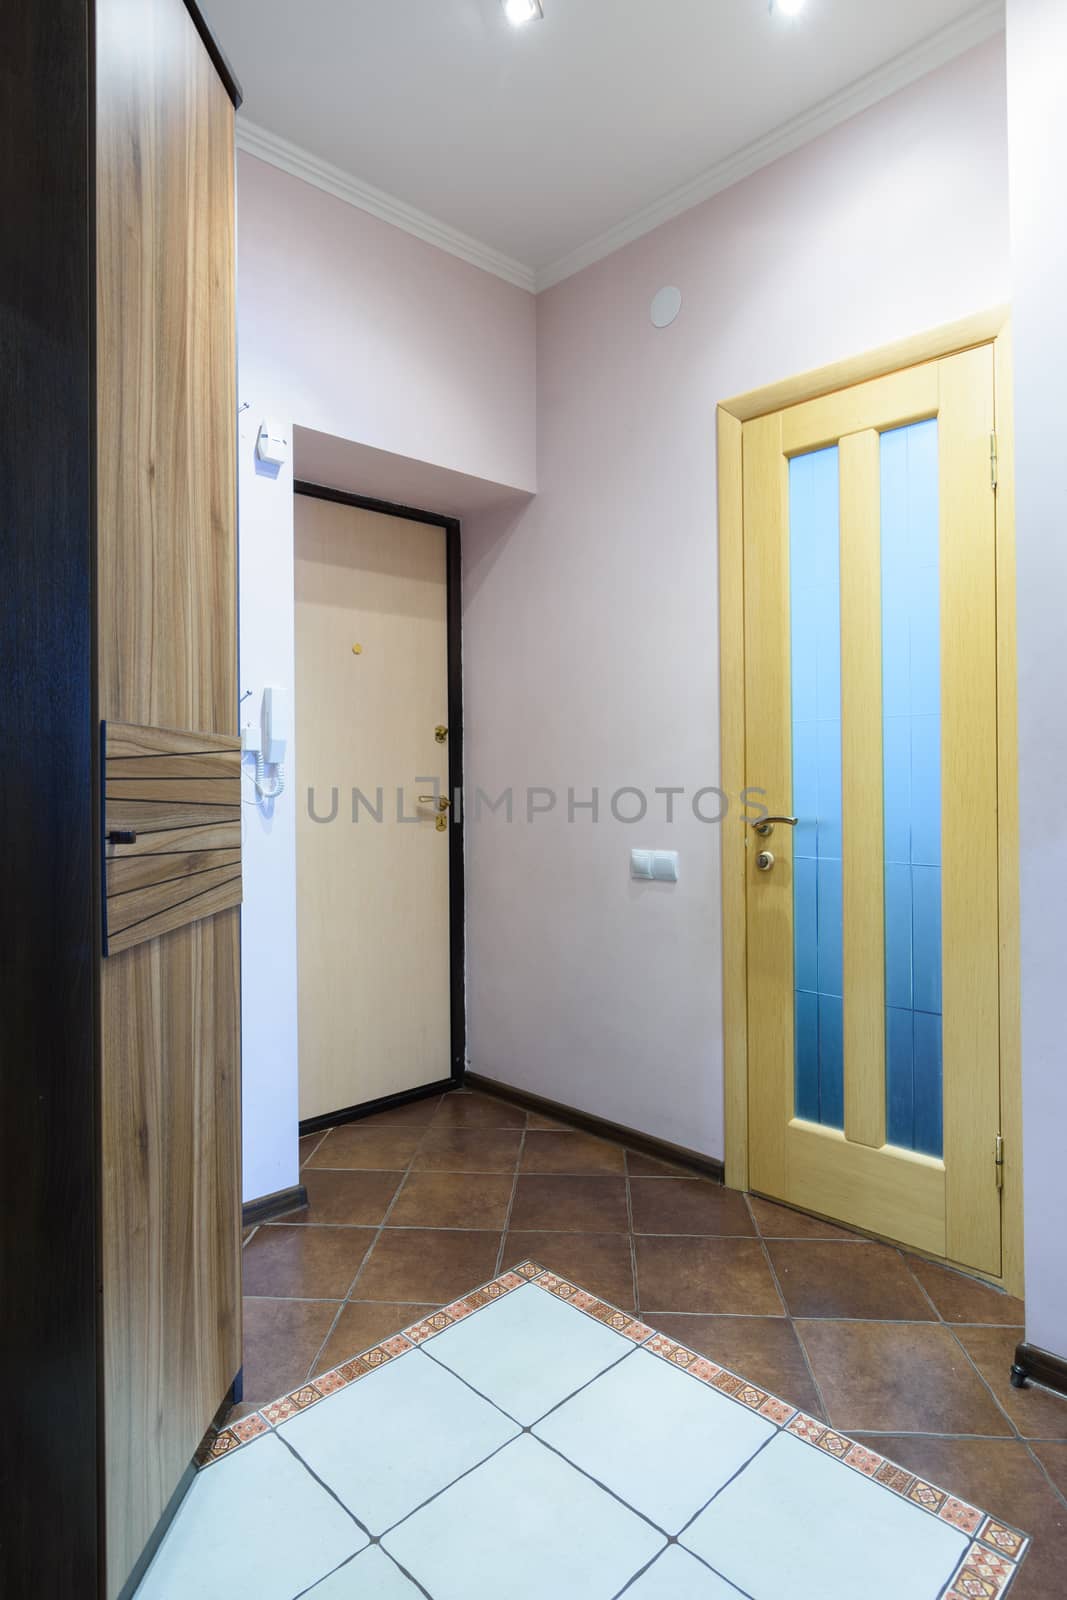 Corridor interior in a small one-room apartment